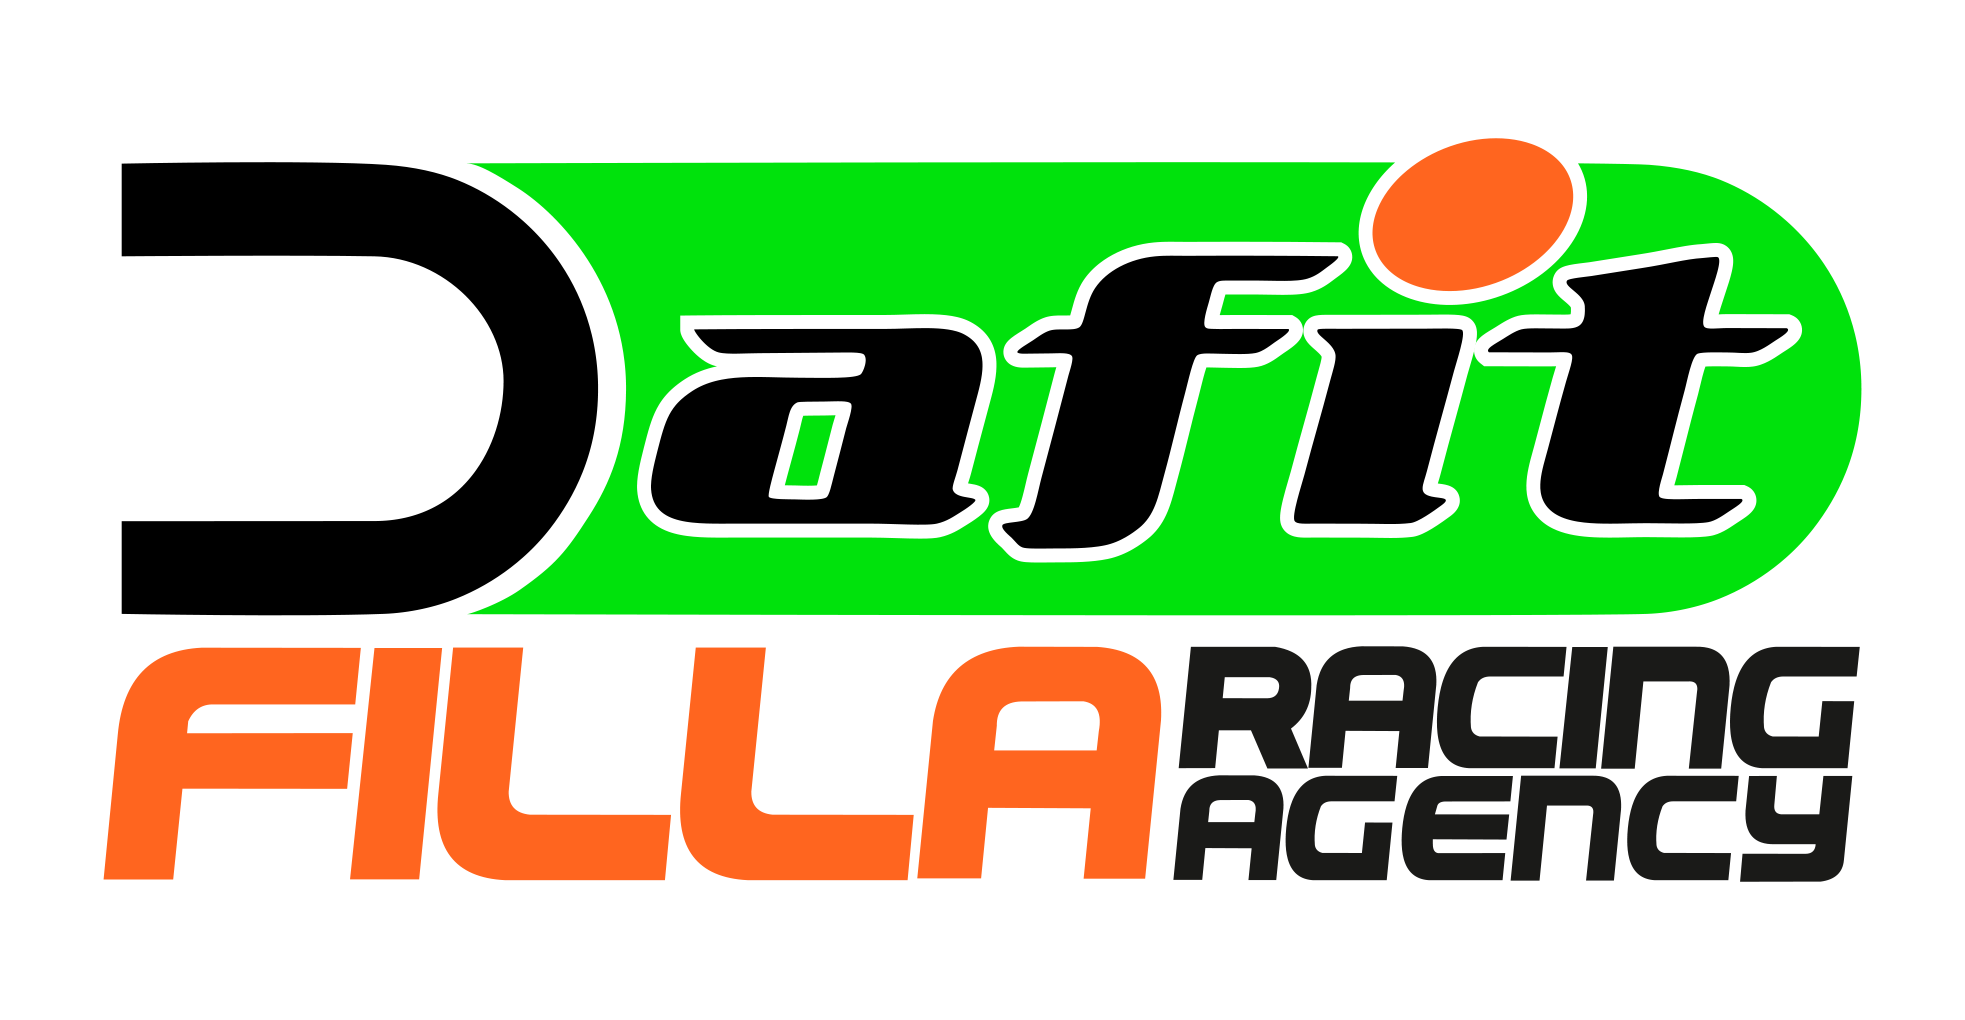 dafit_fila_racing